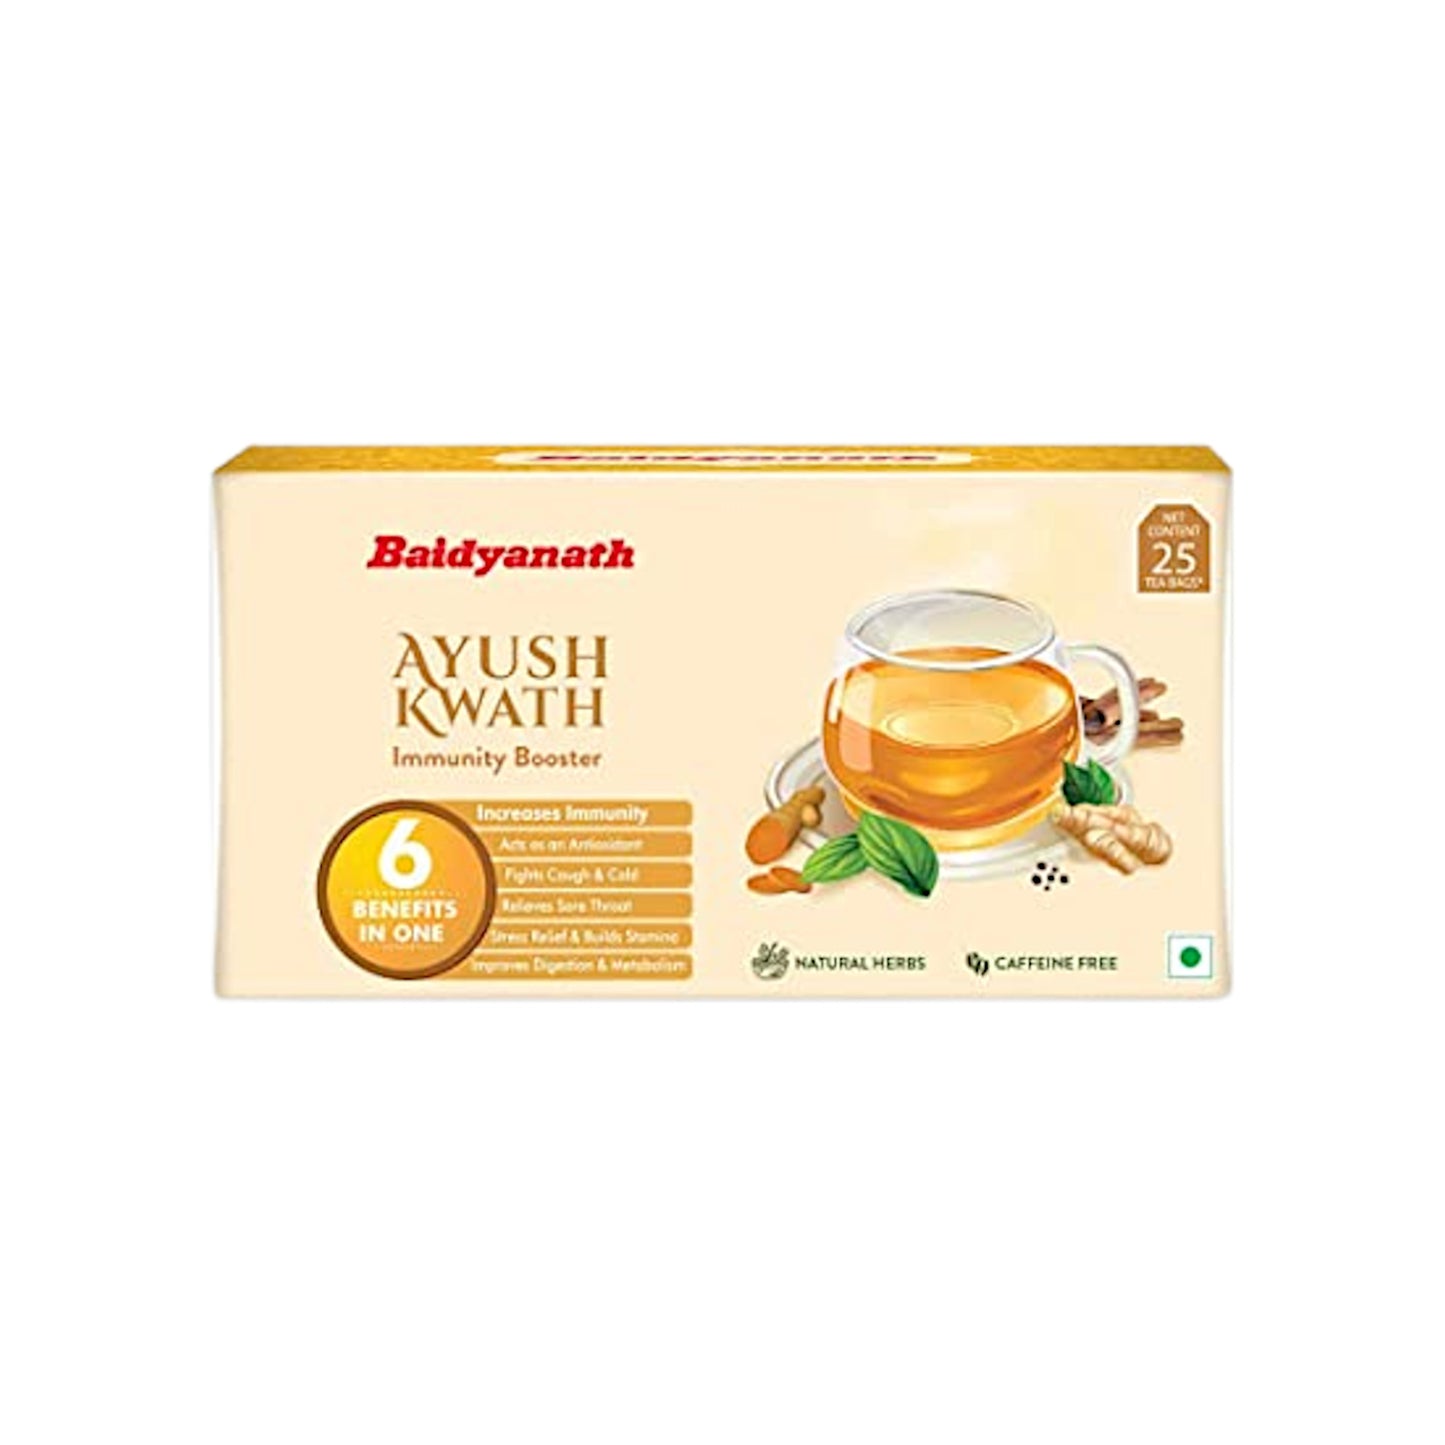 Image: Baidyanath Ayush Kwath 25 Teabags: A herbal tea blend for immune support